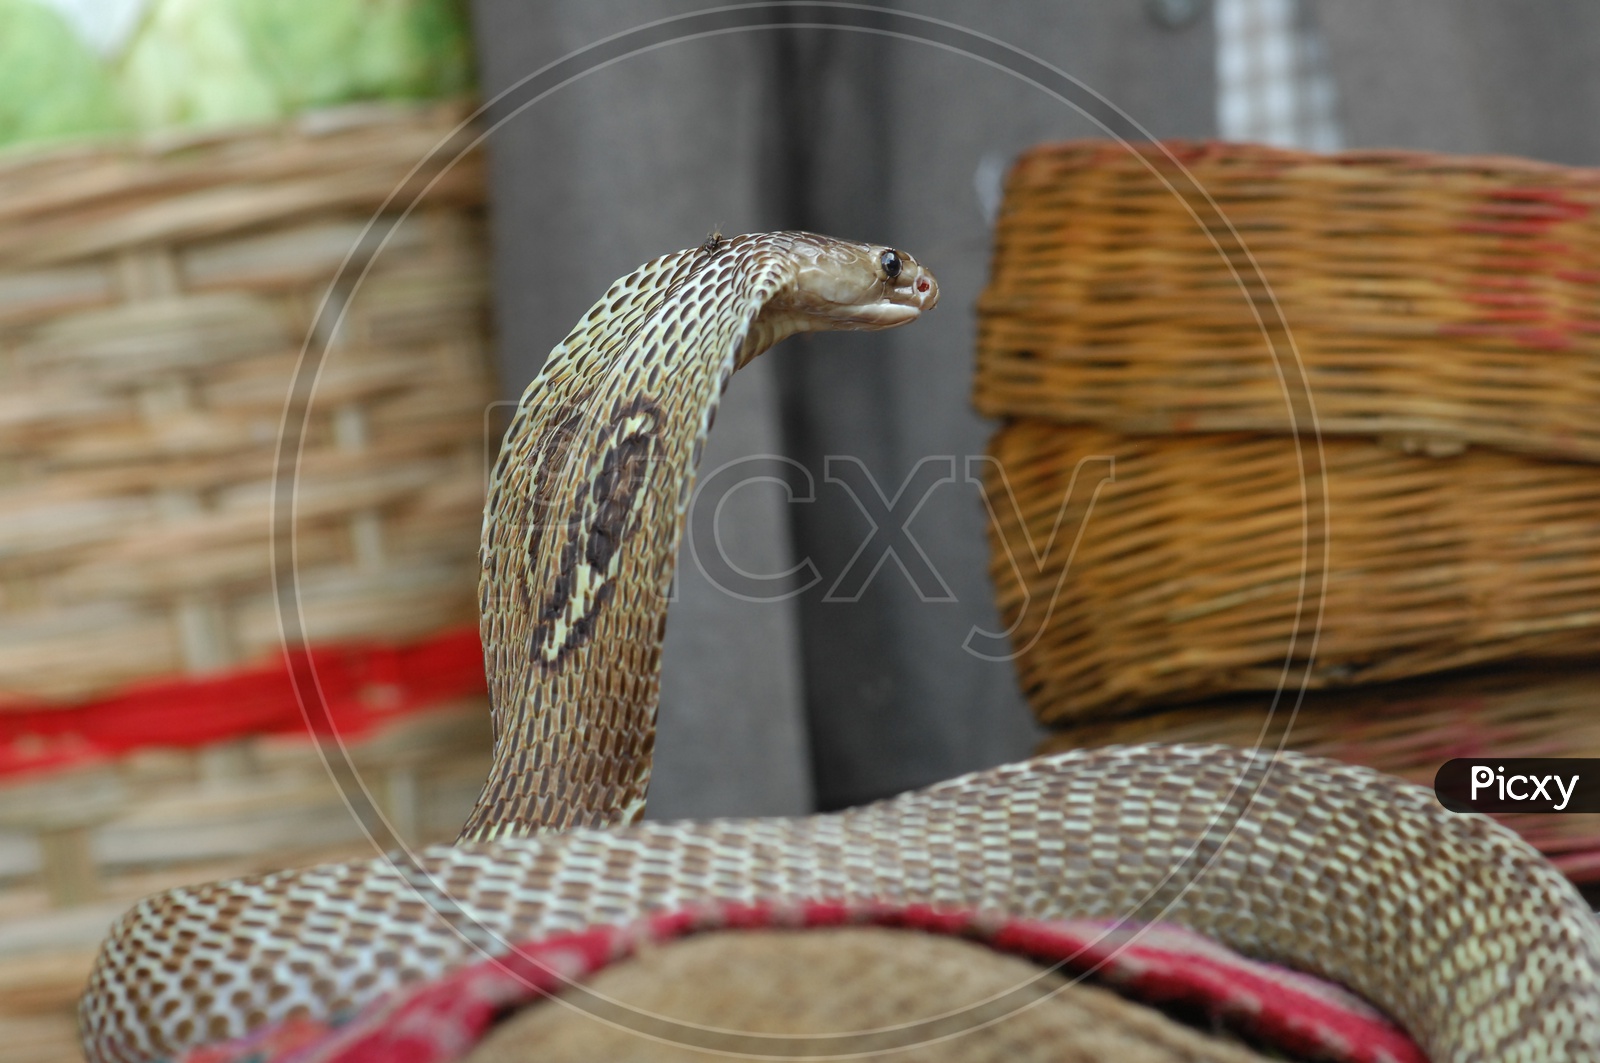 An Indian Cobra